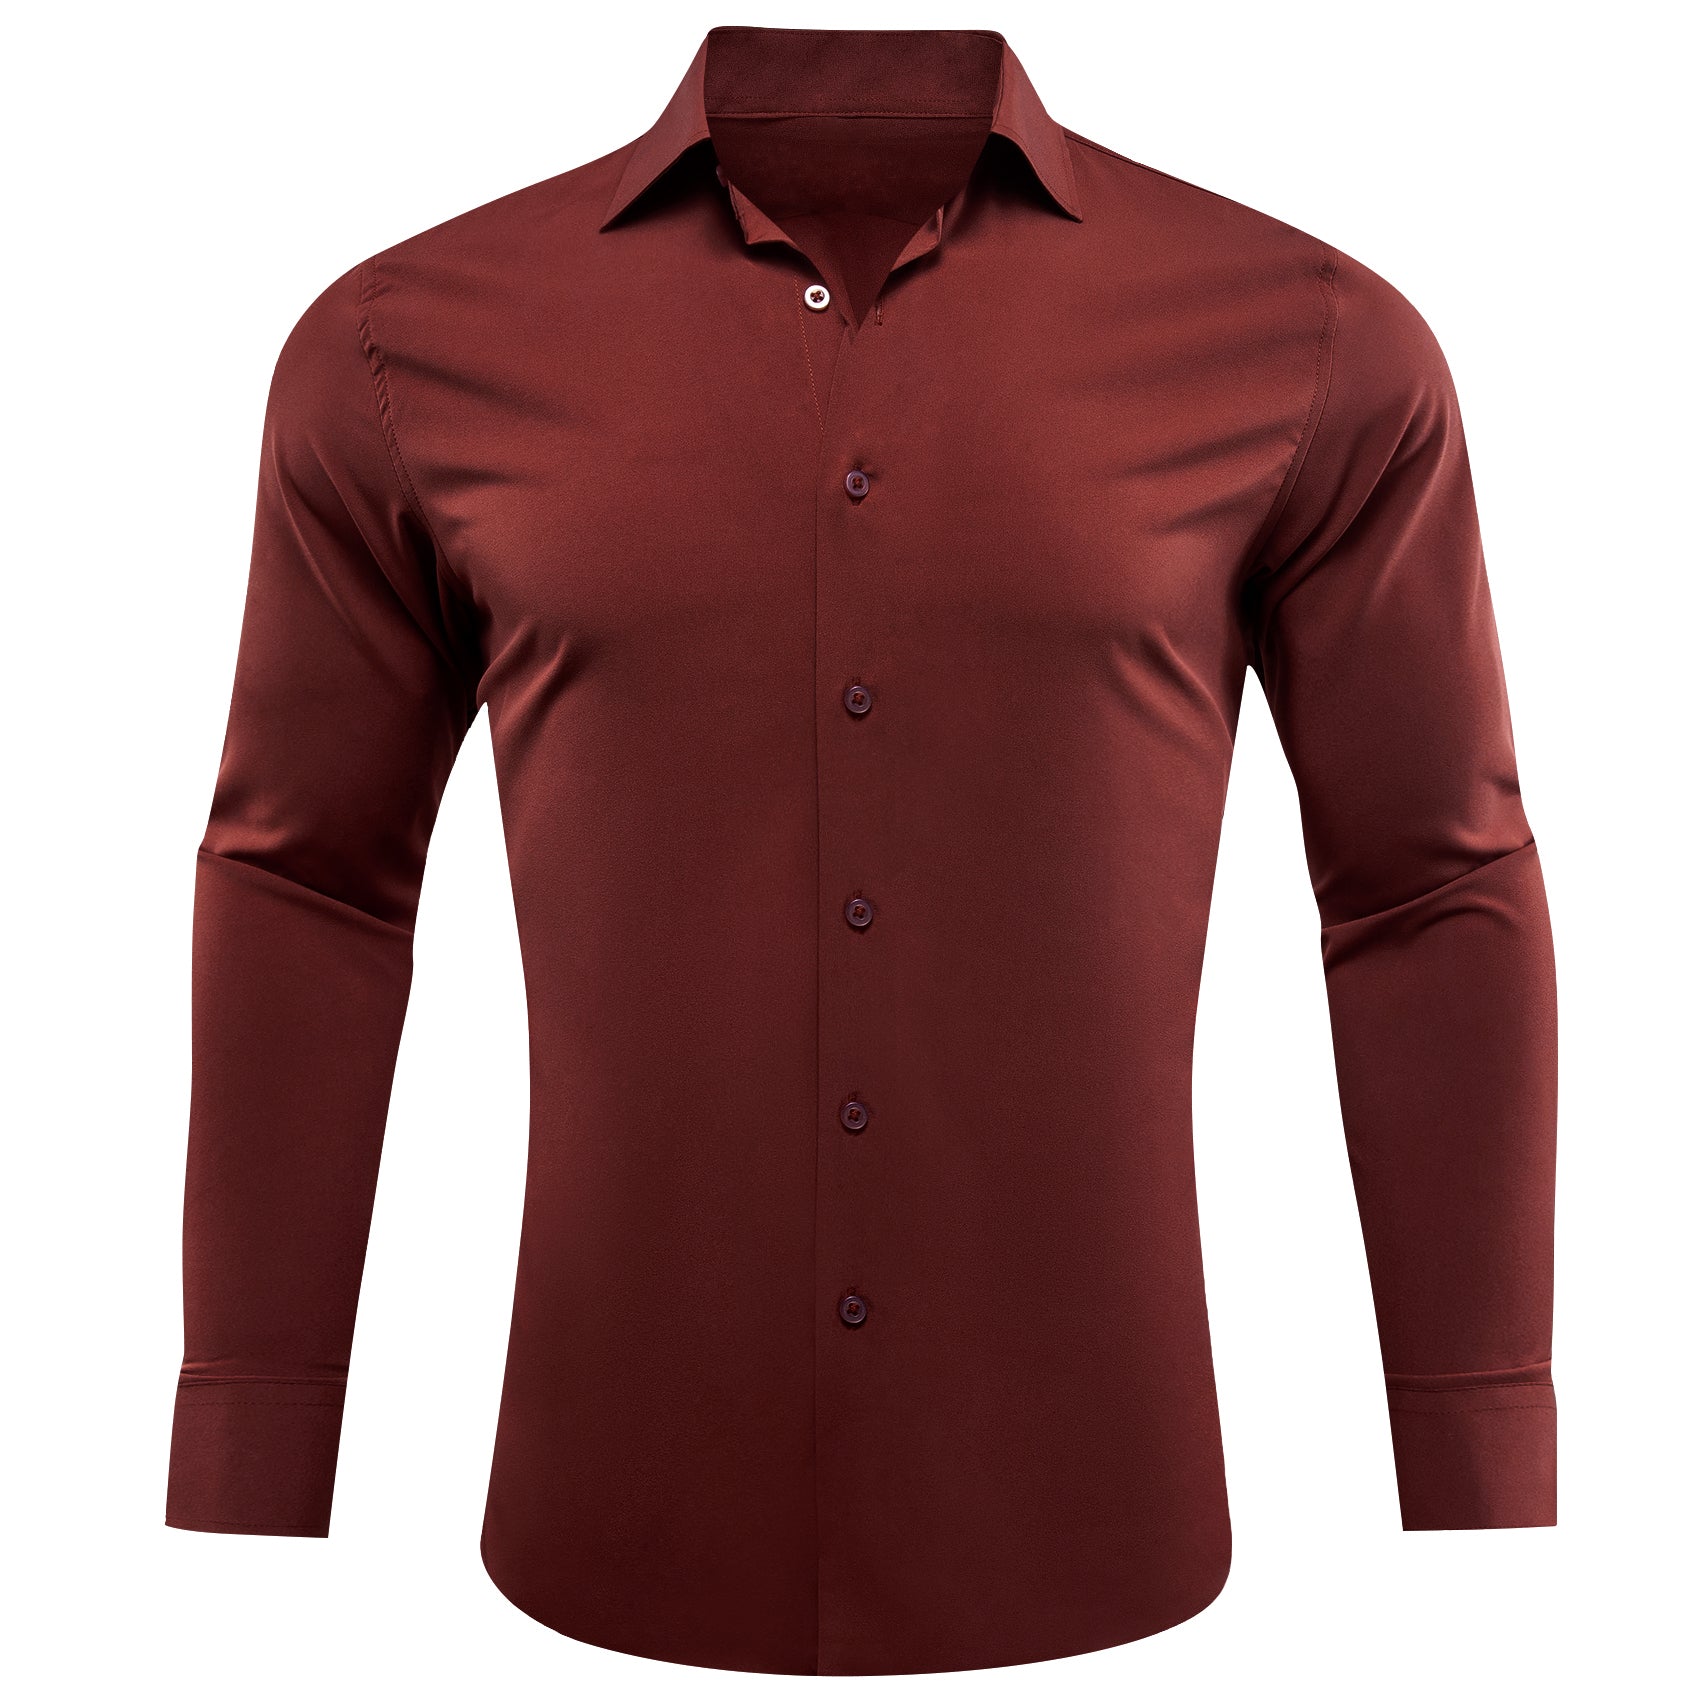 Barry.wang Maroon Solid Silk Shirt